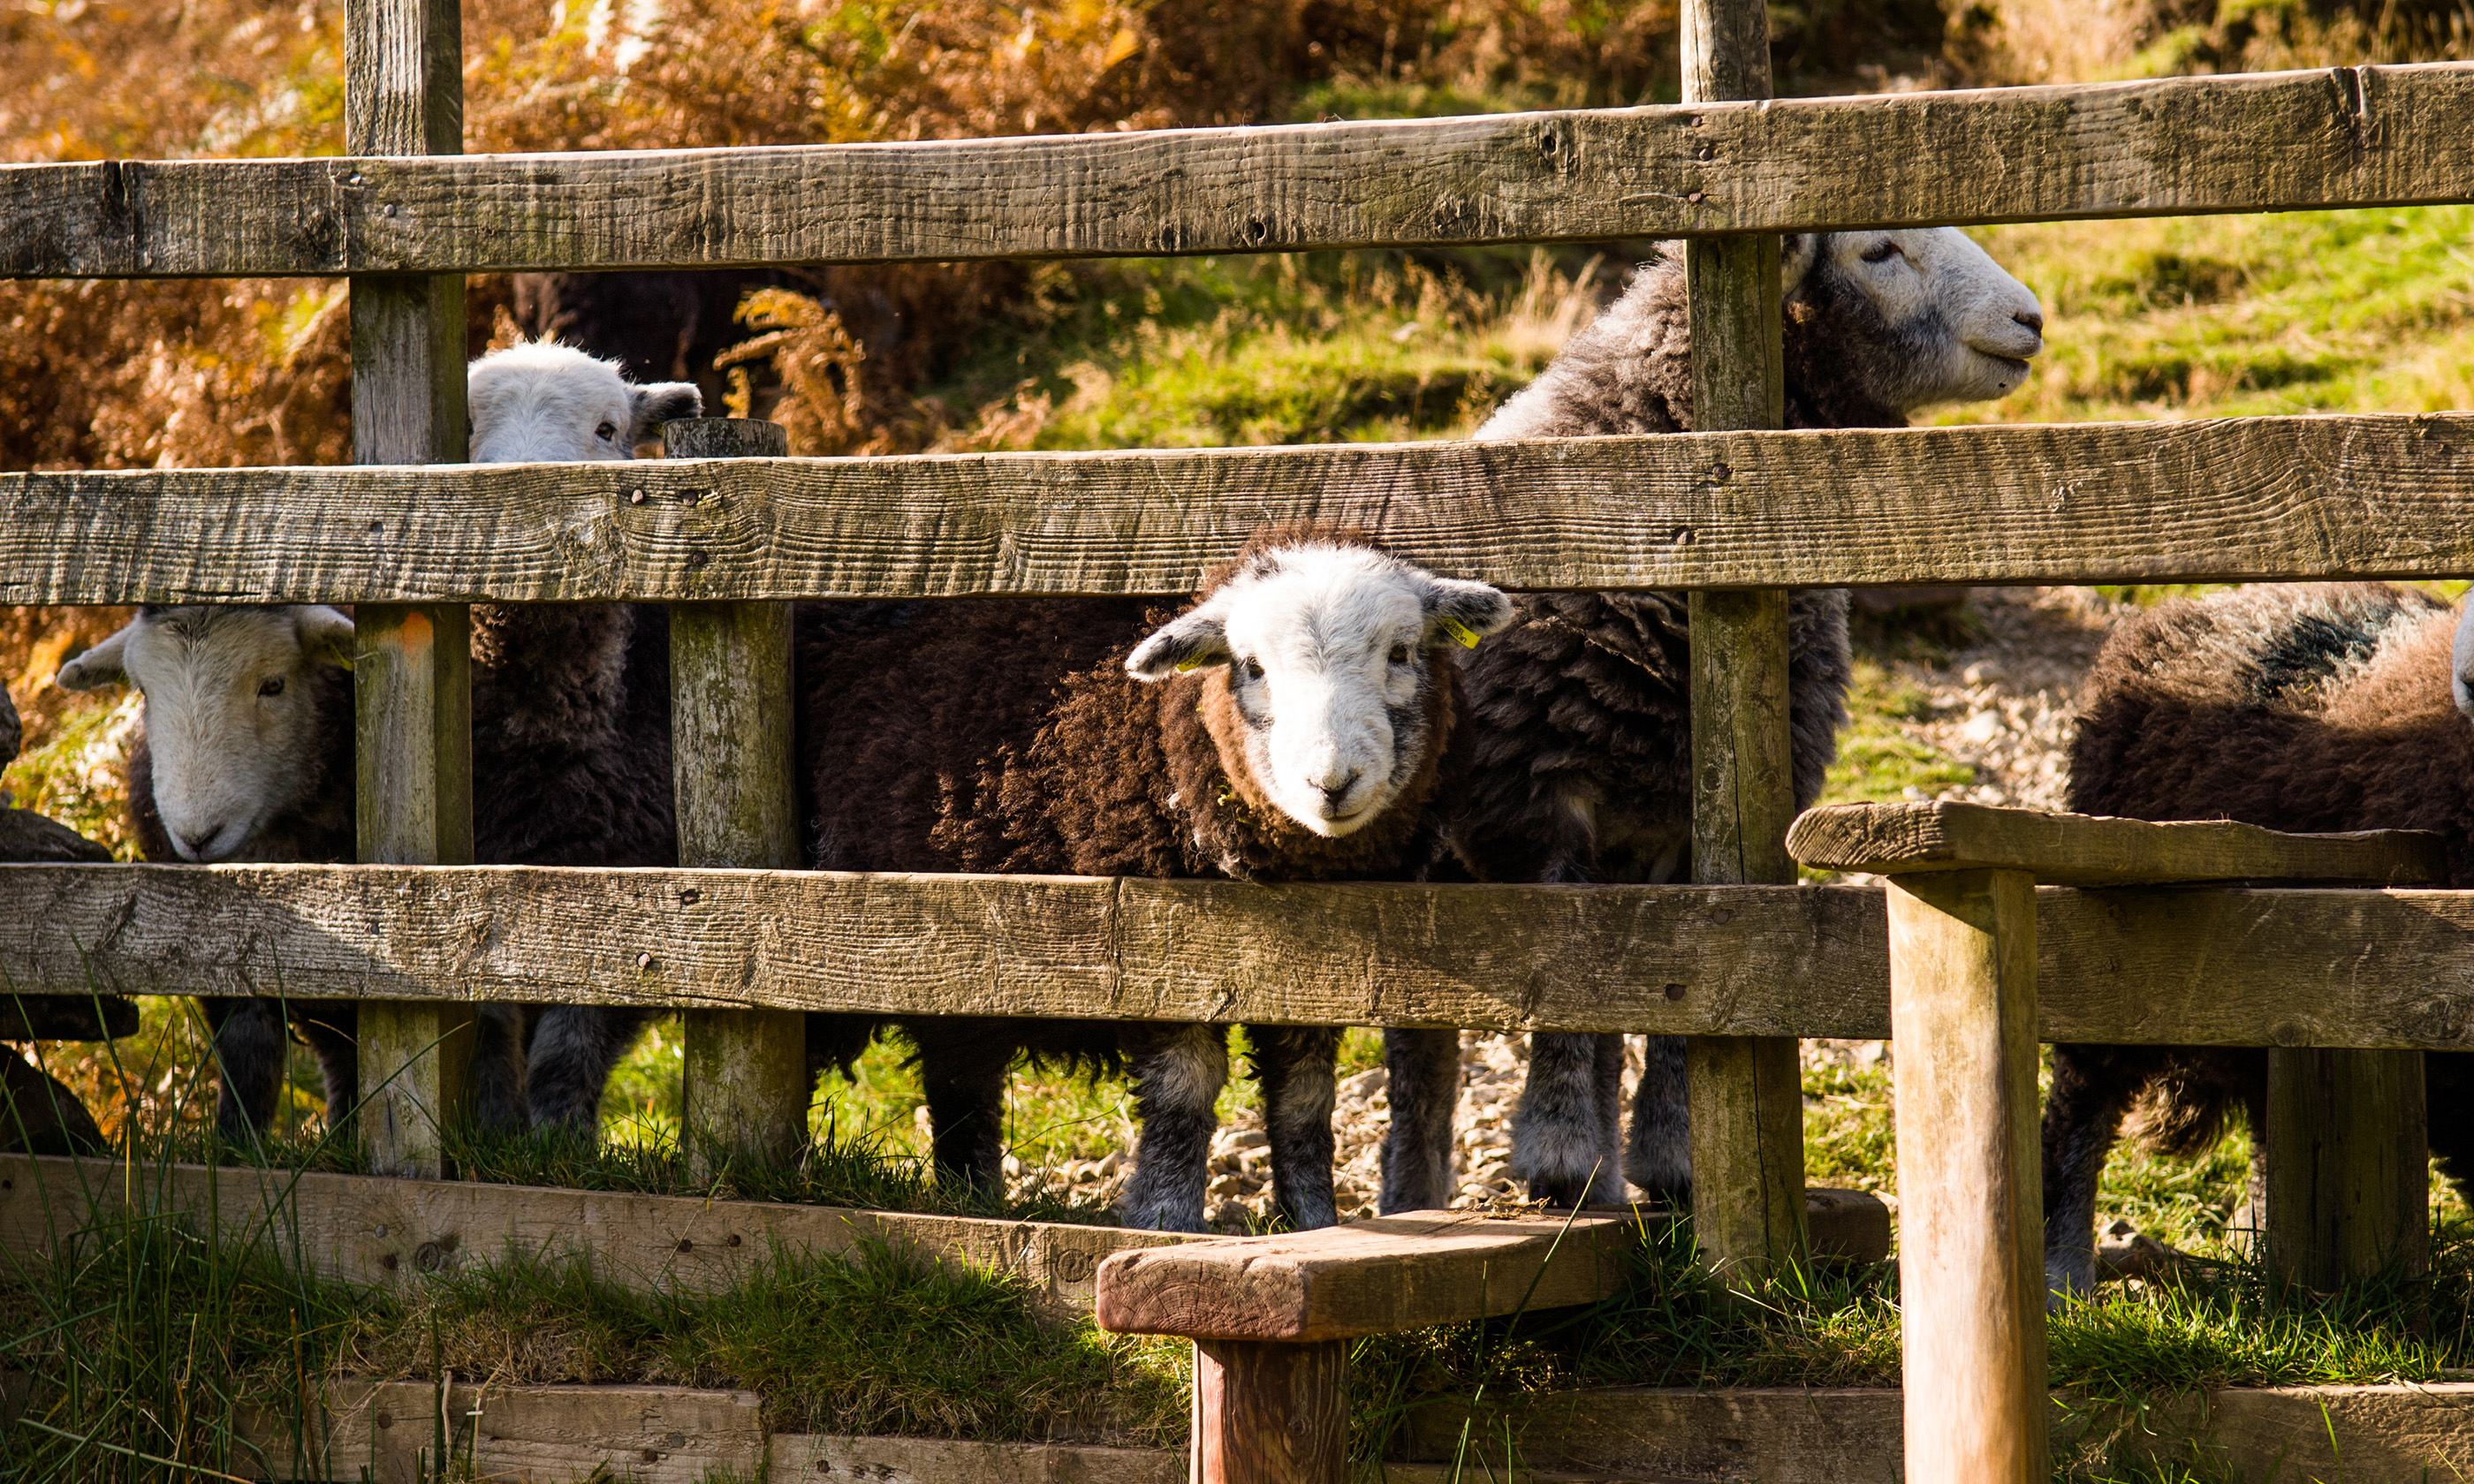 Sheep in Lake District (Shutterstock.com. See main credit below.)